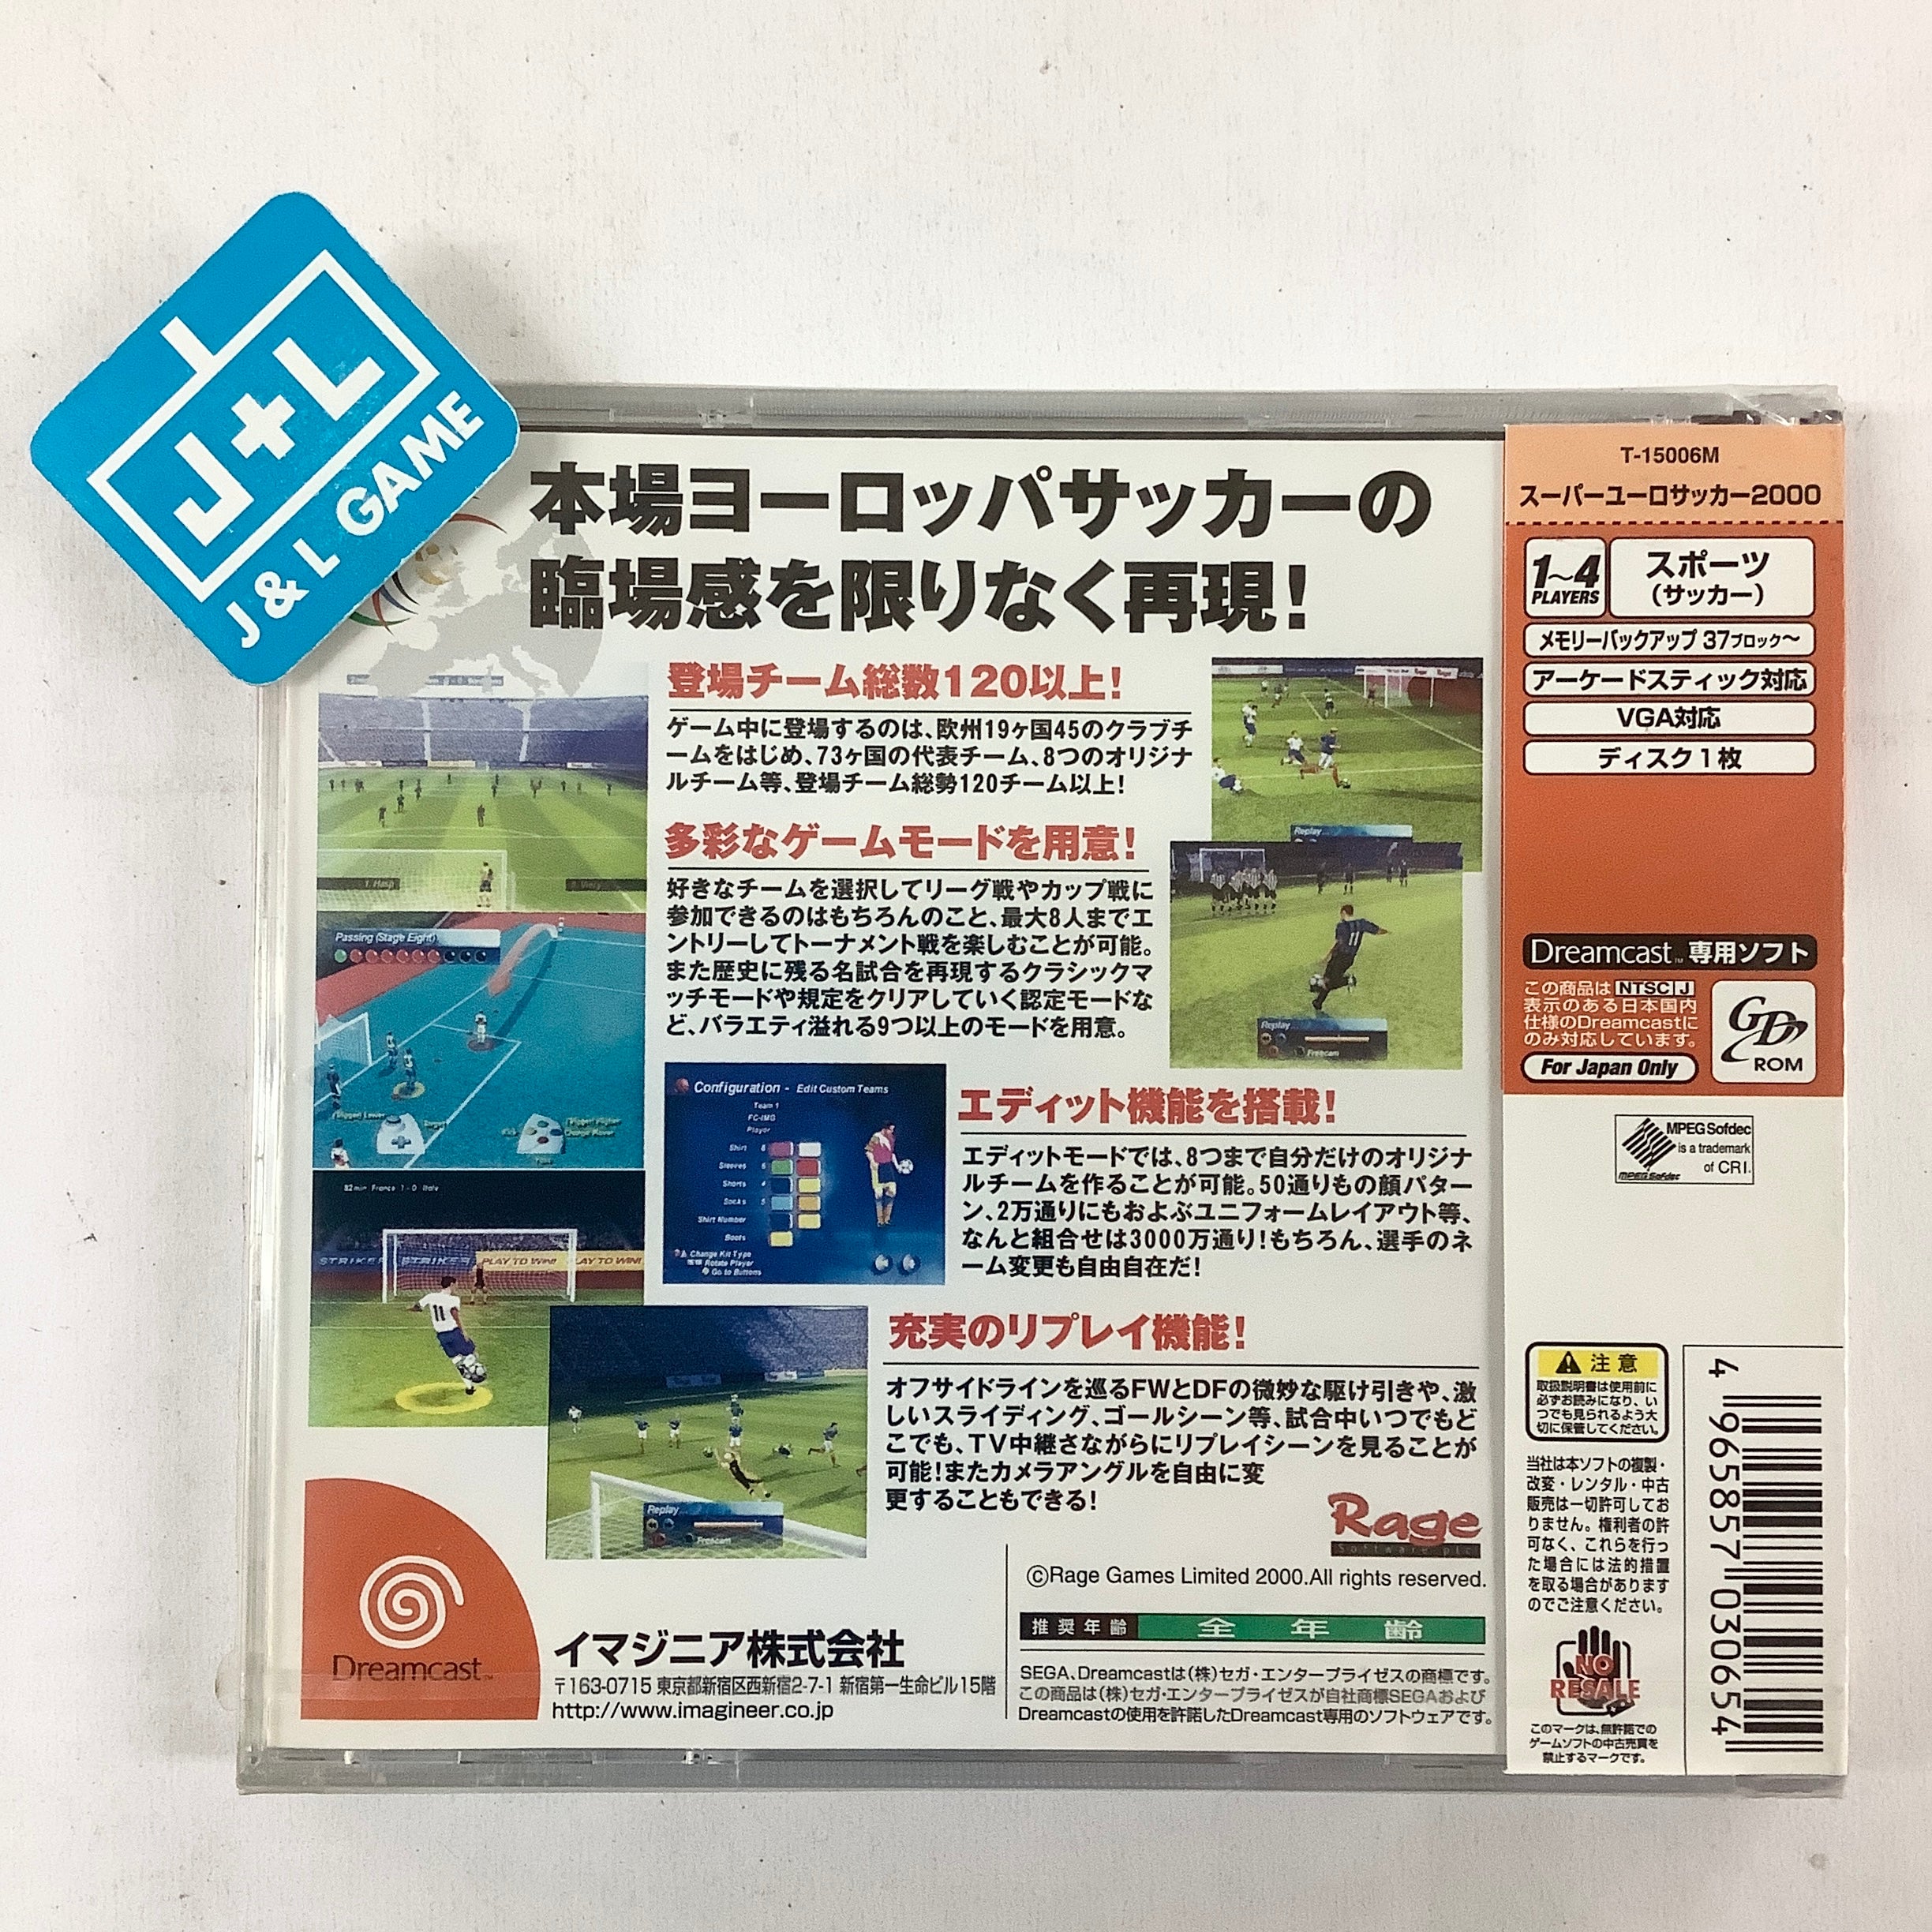 Super Euro Soccer 2000 - (DC) SEGA Dreamcast (Japanese Import) Video Games Imagineer   